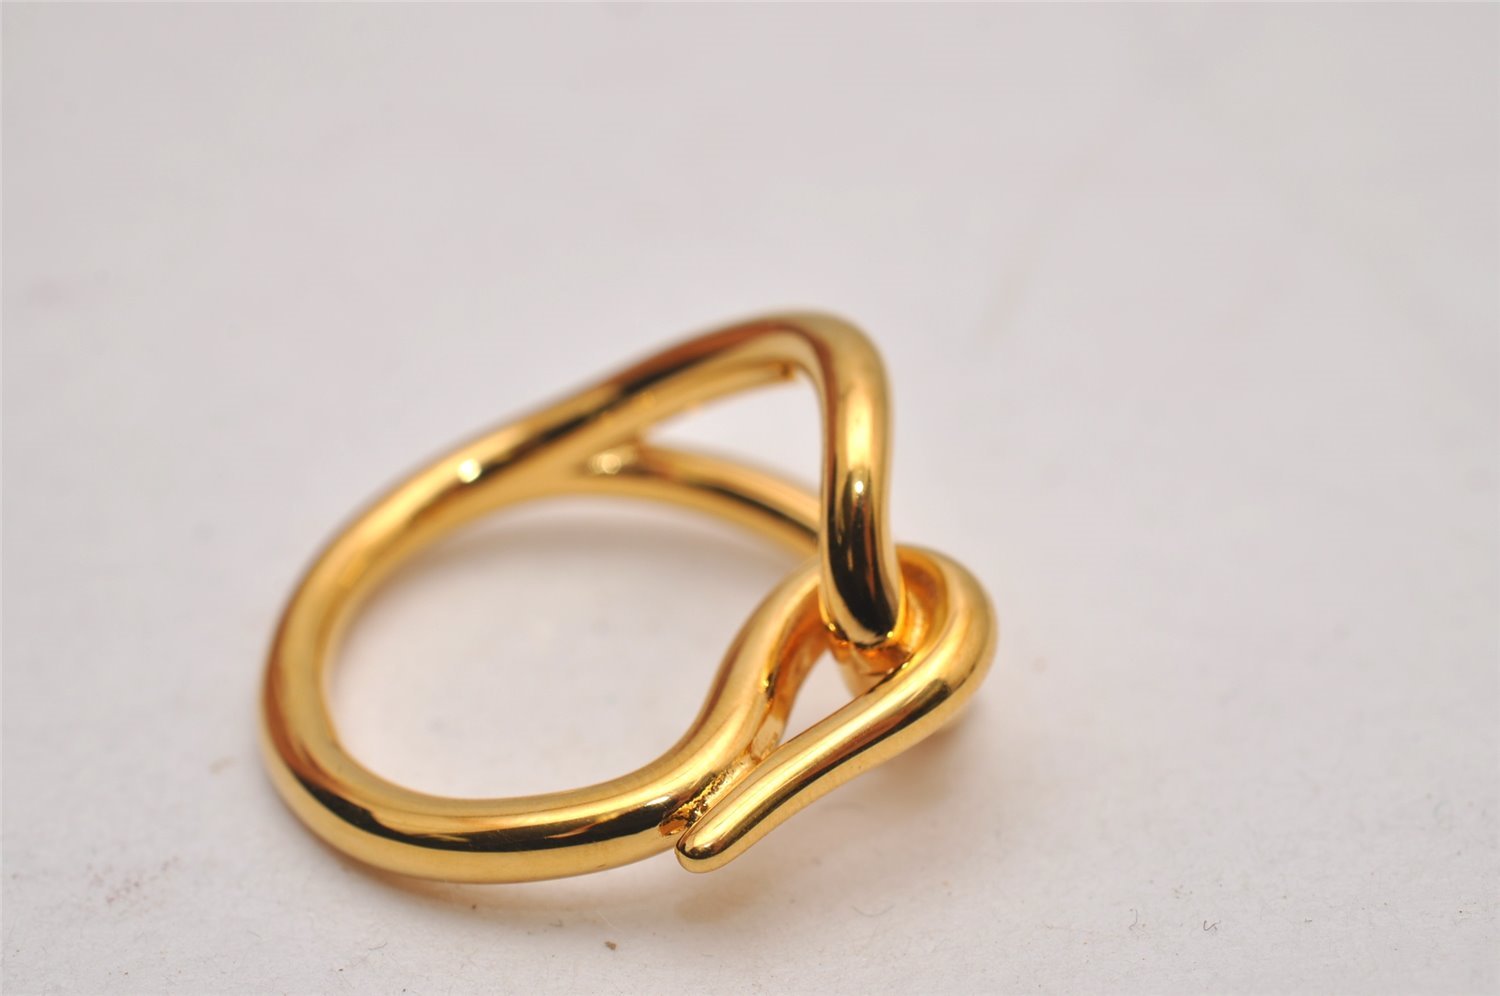 Authentic HERMES Scarf Ring Jumbo Circle Design Gold Tone 8974I